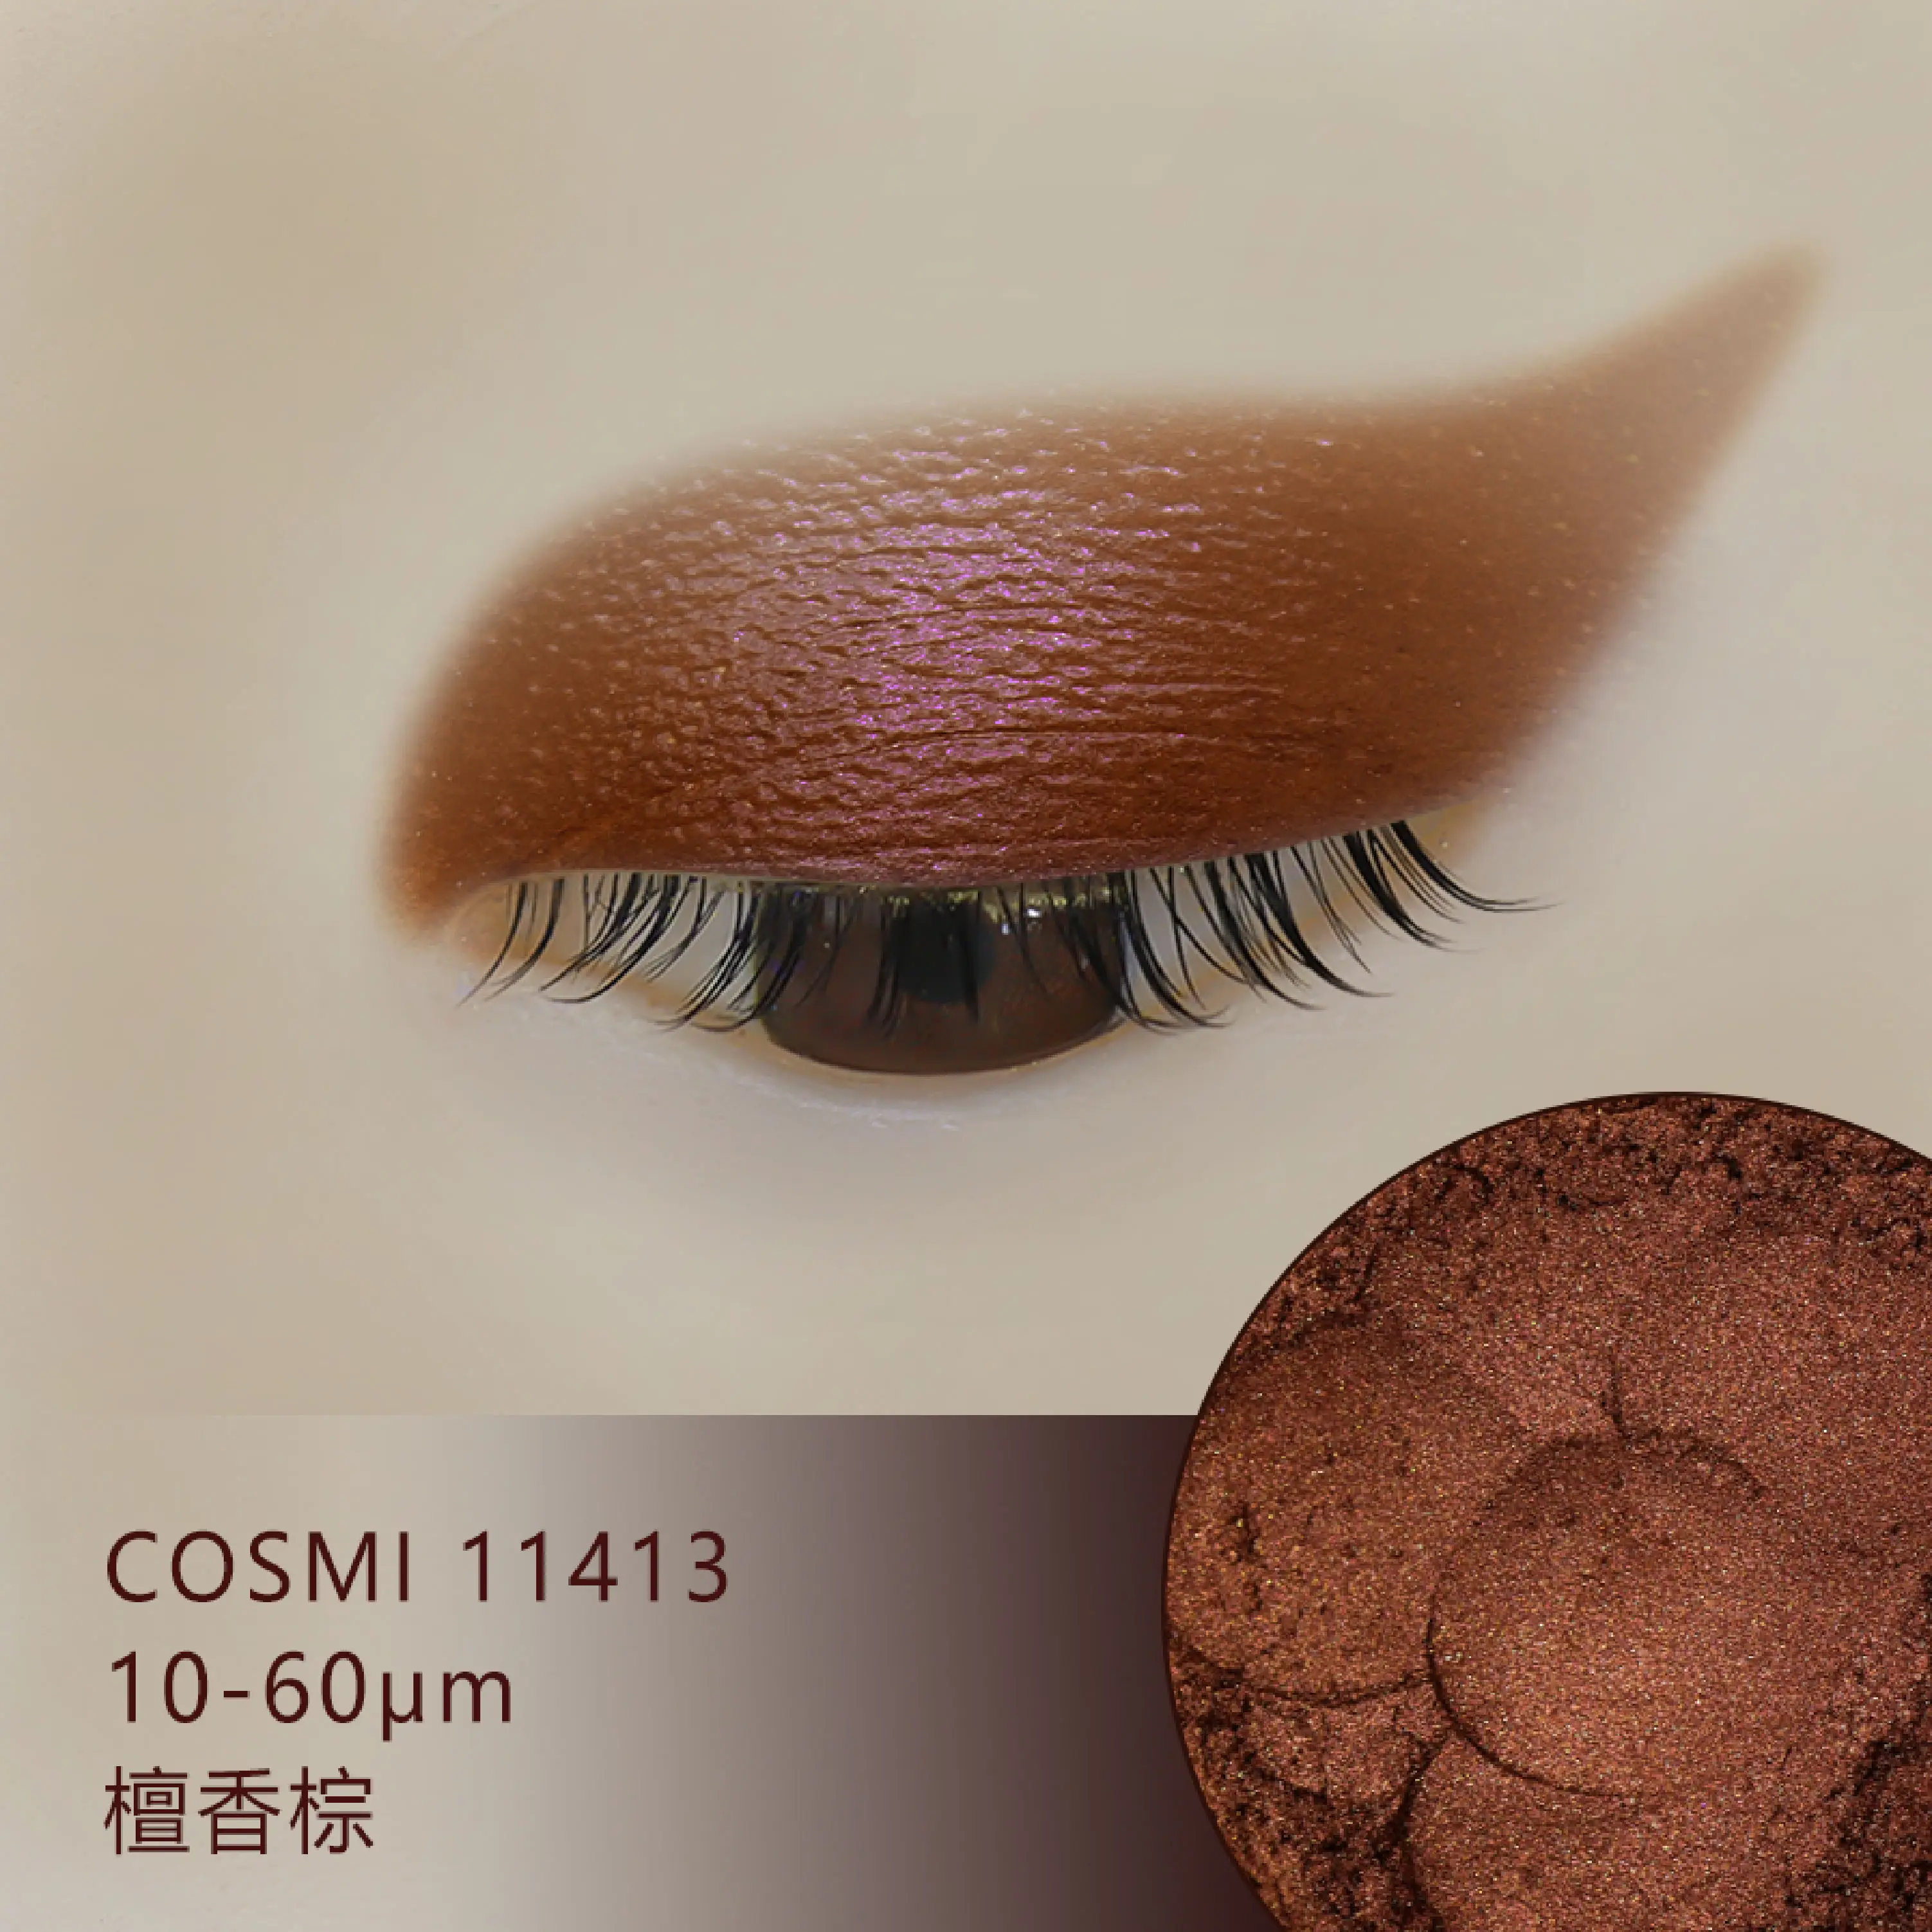 Cosmetic eye shadow colourant pearlescent powder mica powder illusion lipstick safe pigment powder